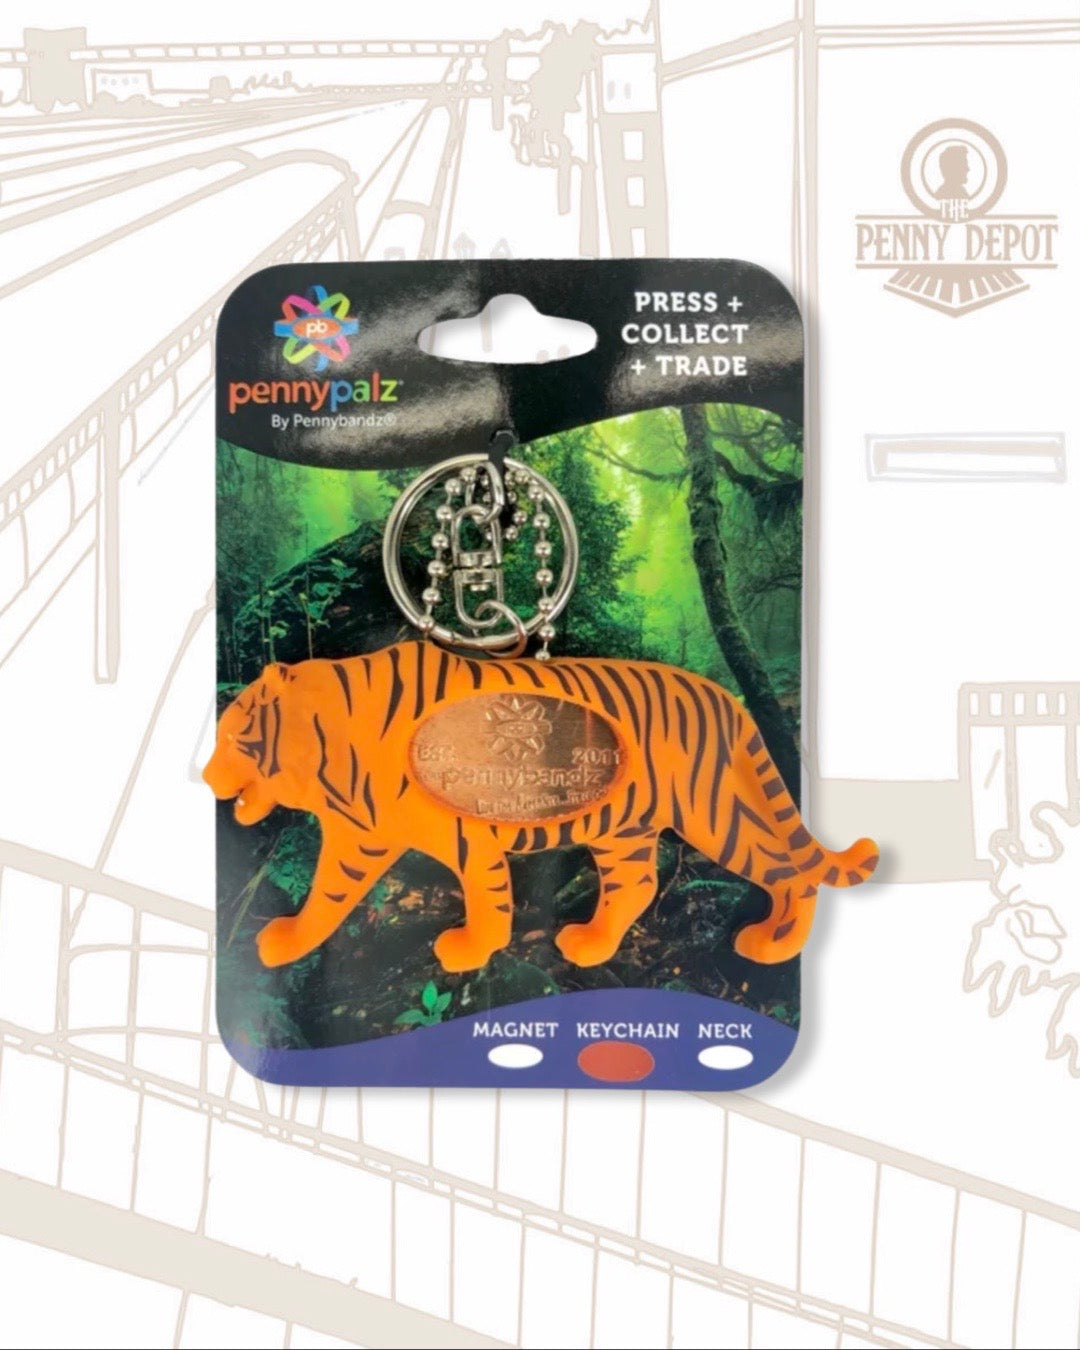 Kota the Tiger Pennybandz Accessories